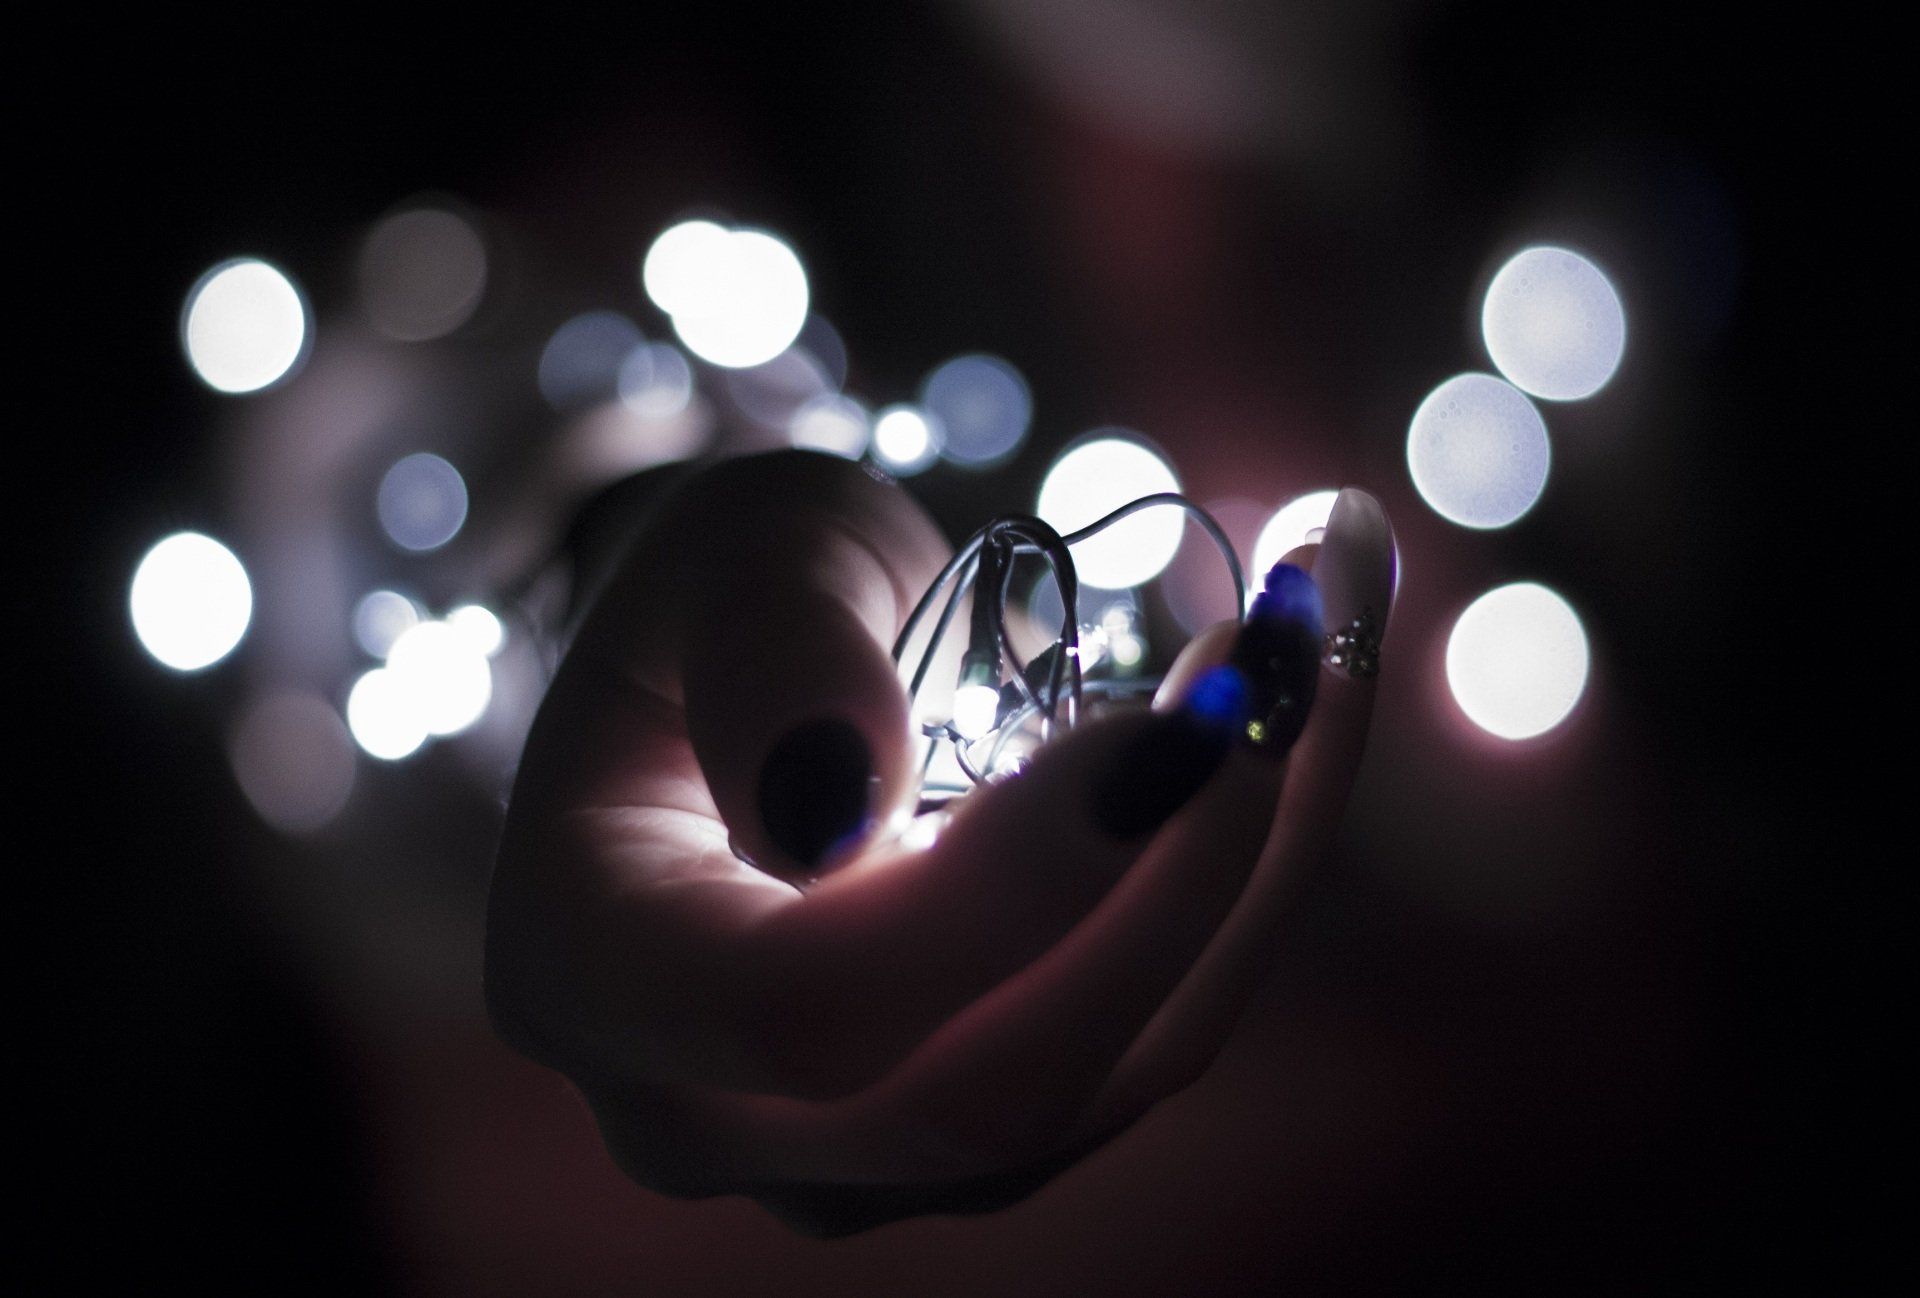 a hand holding lights